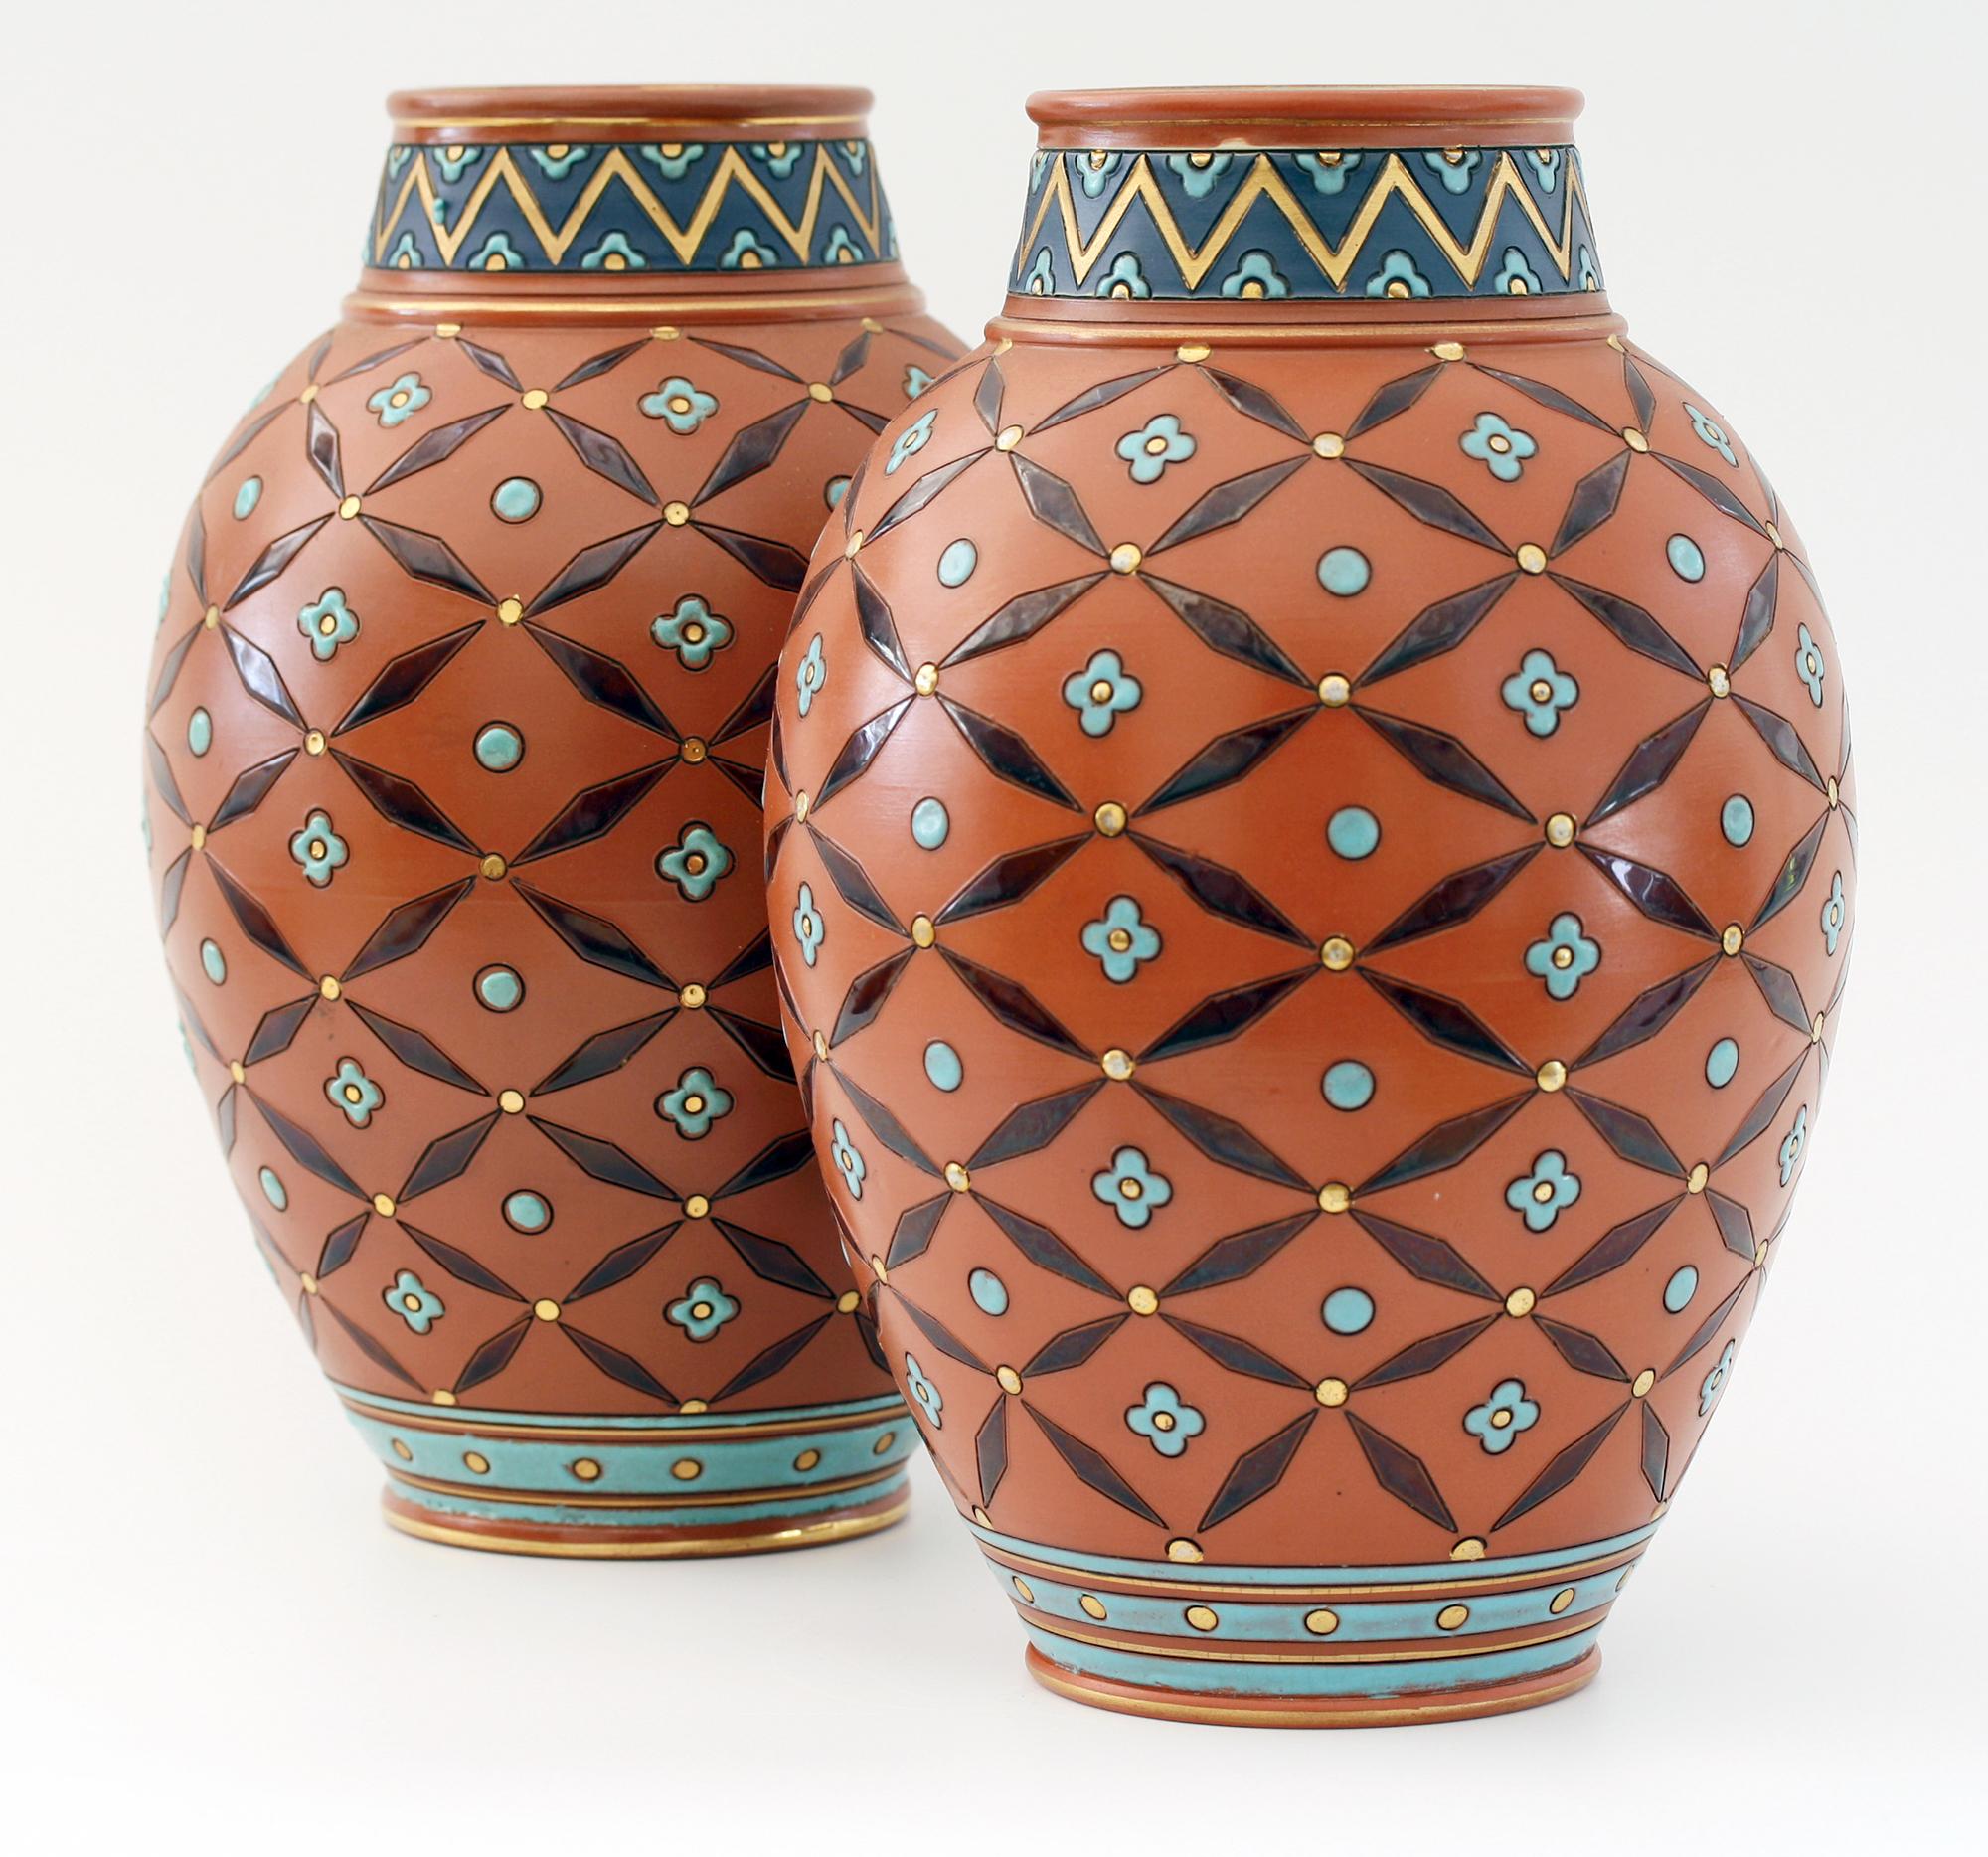 Belgian Hans Christiansen Pair of Villeroy & Boch Gothic Revival Vases, circa 1900